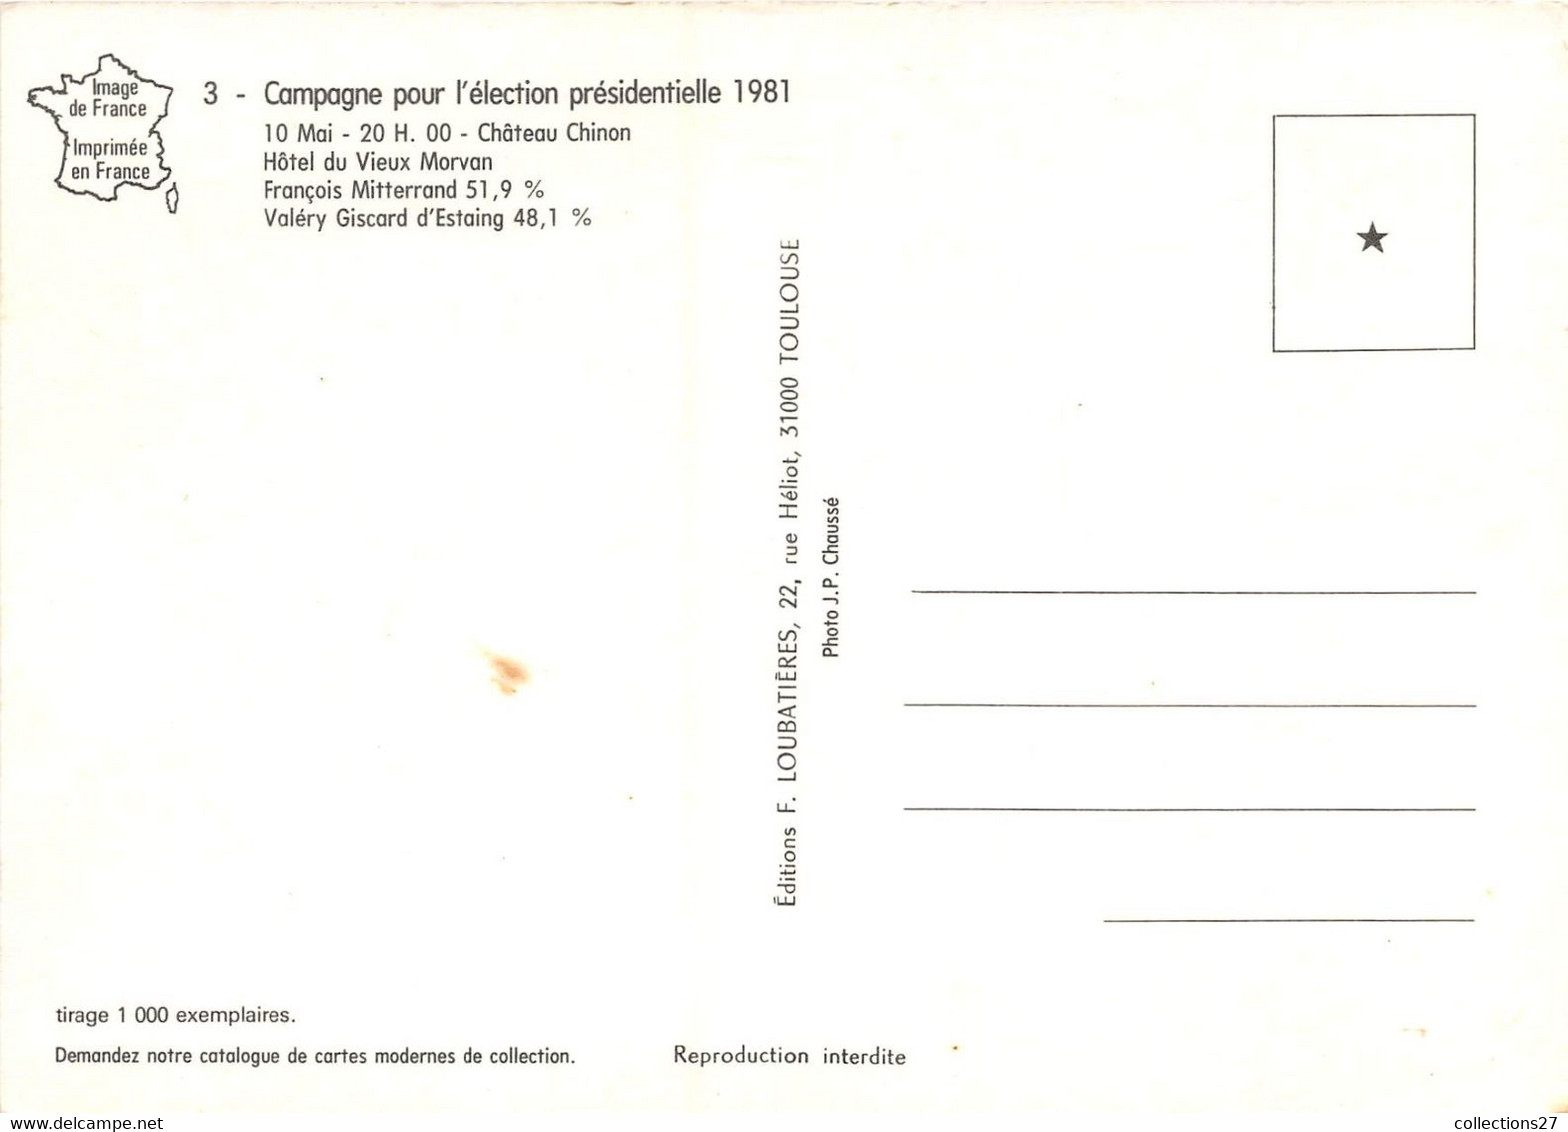 58-CHATEAU-CHINON- CAMPAGNE POUR L'ELECTION PRESIDENTIELLE 10 MAI 1981 A 20 HEURE FRANCOIS MITTERRAND - ELU - Chateau Chinon